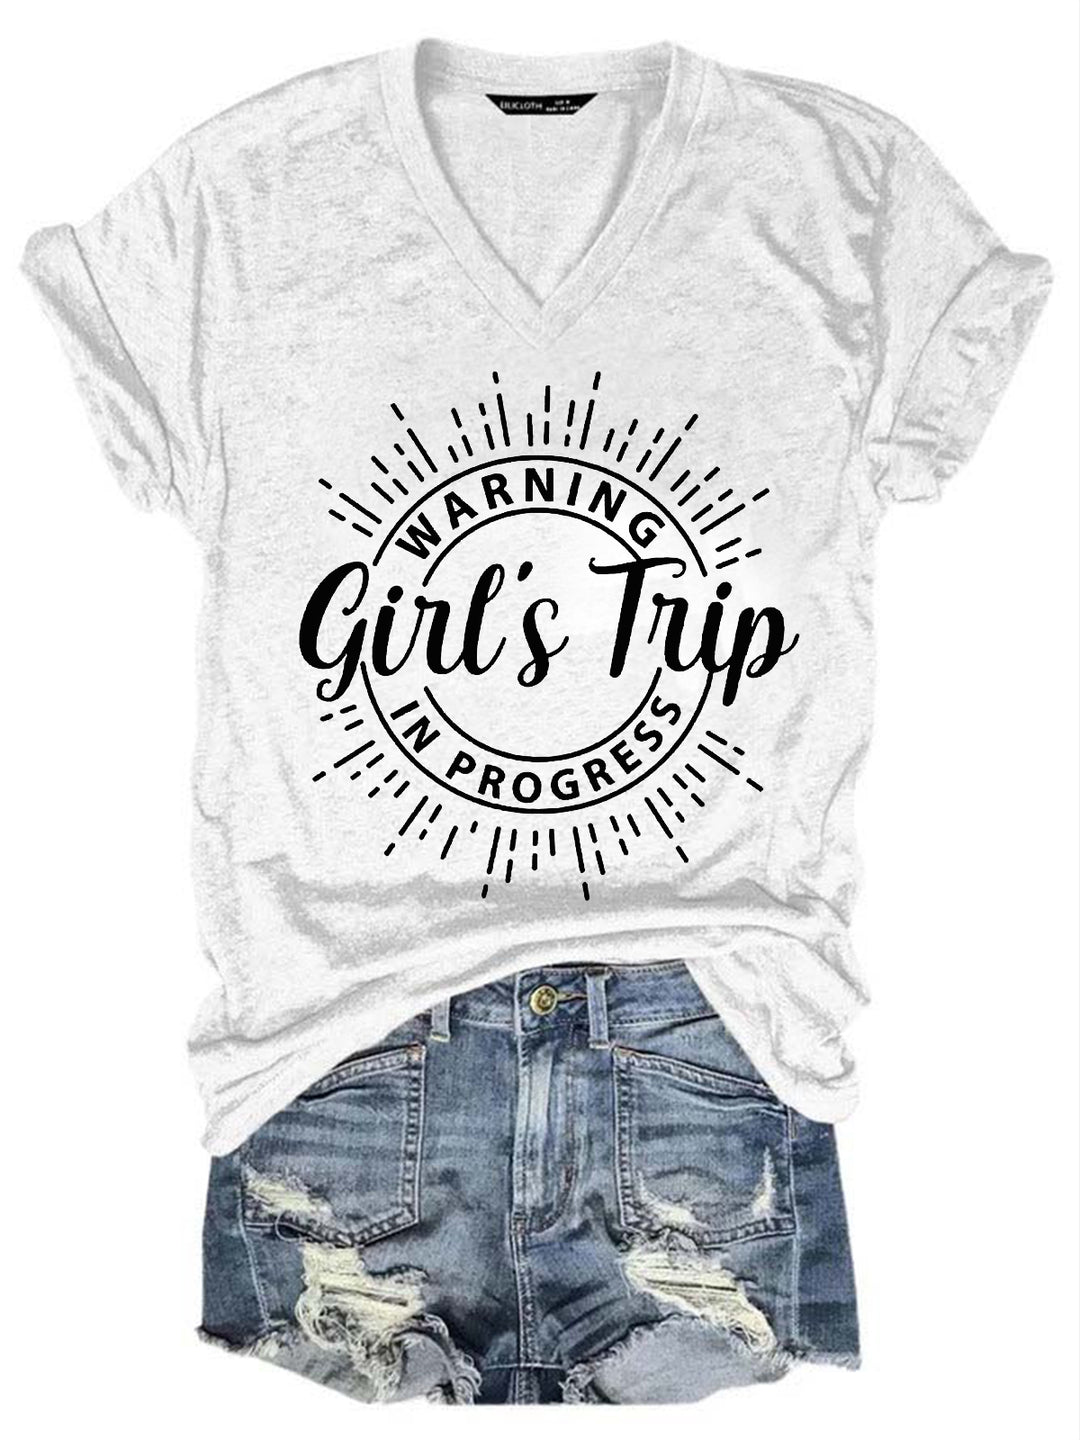 Warning Girl's Trip In Progress V Neck Cotton Blends Shirts & Tops